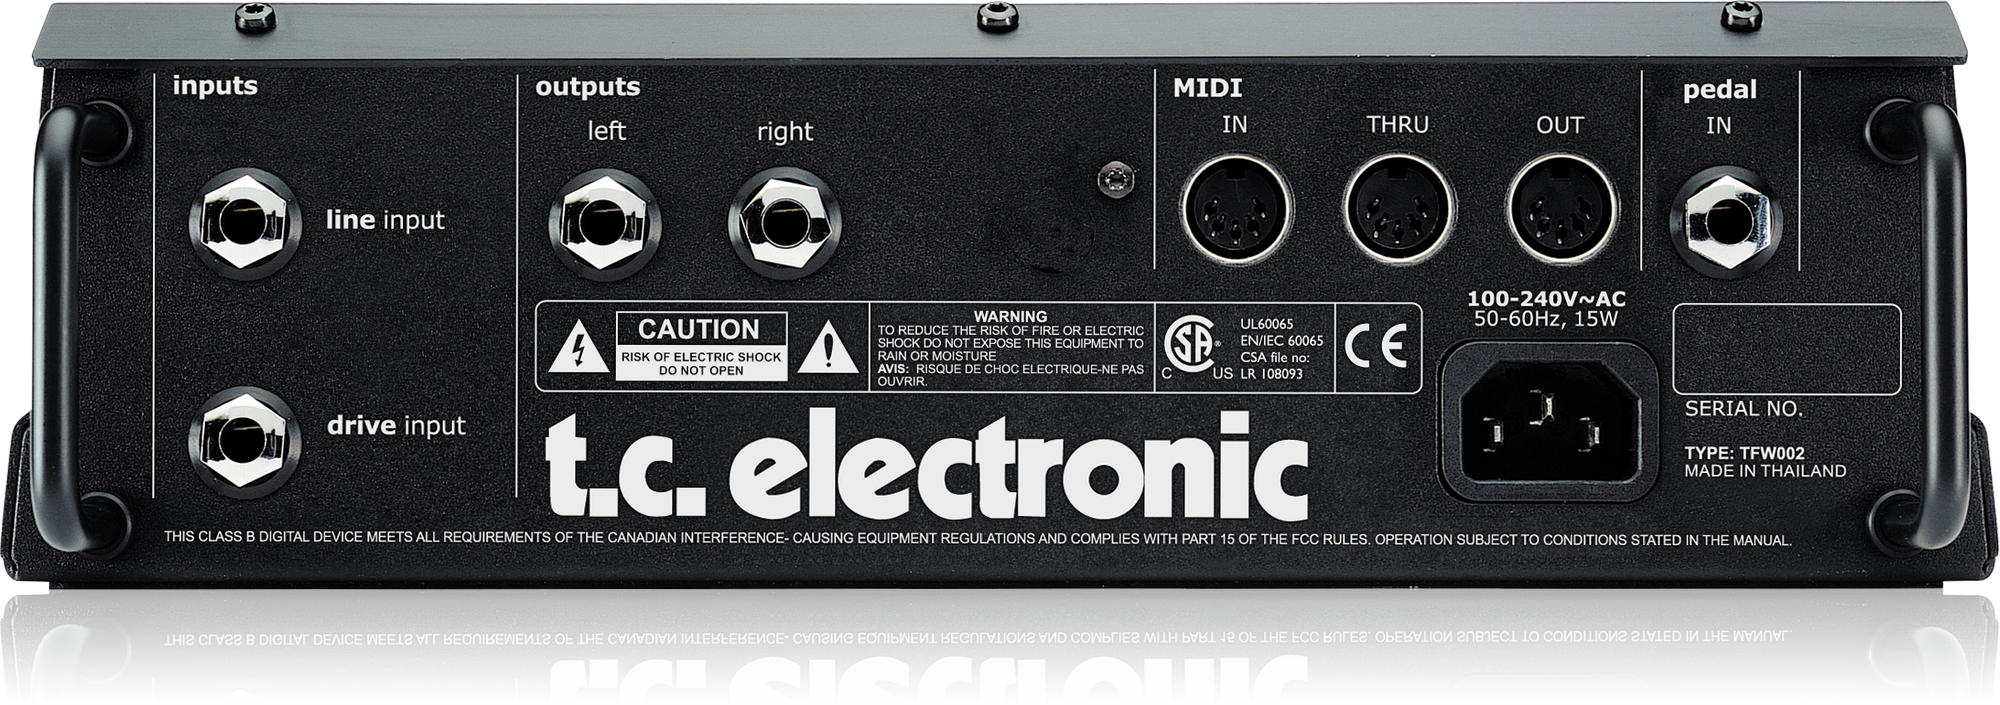 TC Electronic | Product | NOVA SYSTEM